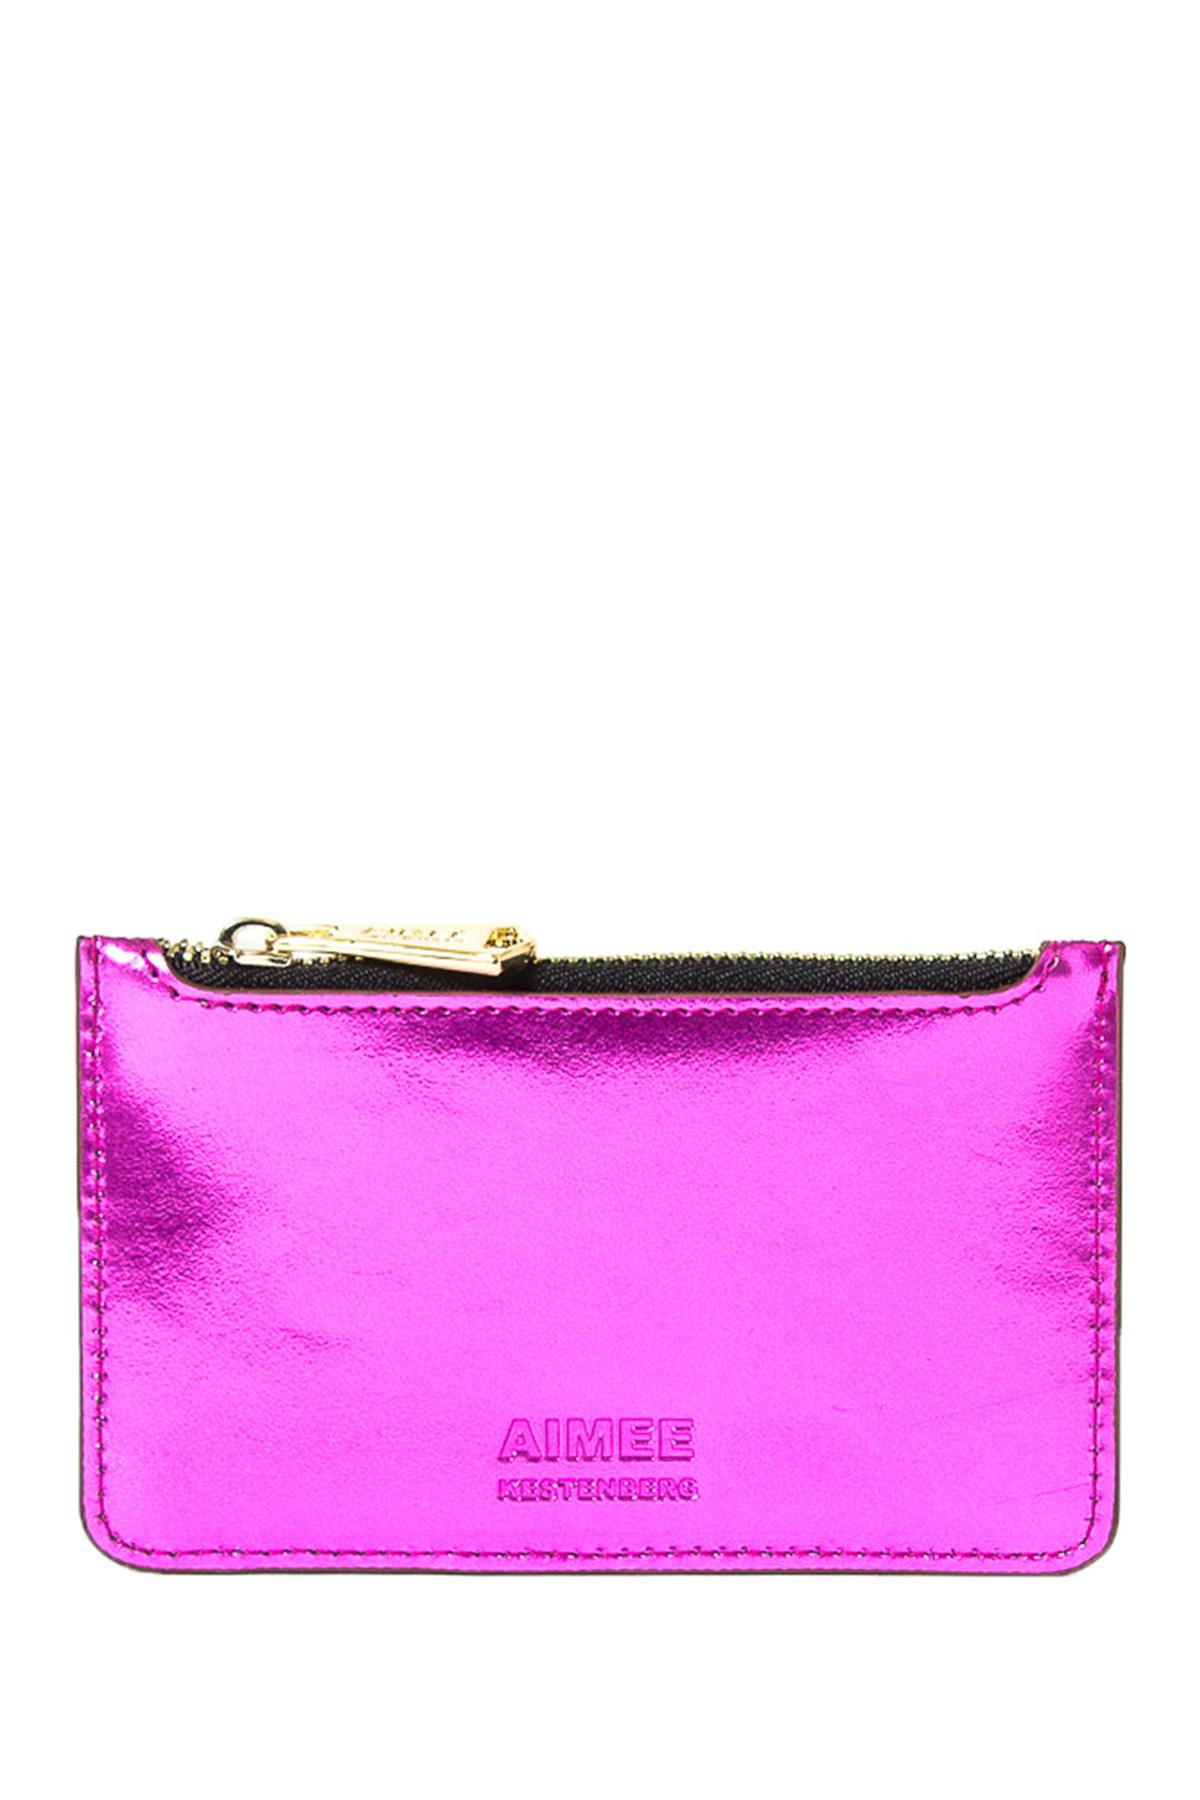 Aimee Kestenberg Melbourne Leather Wallet in Pink - Lyst